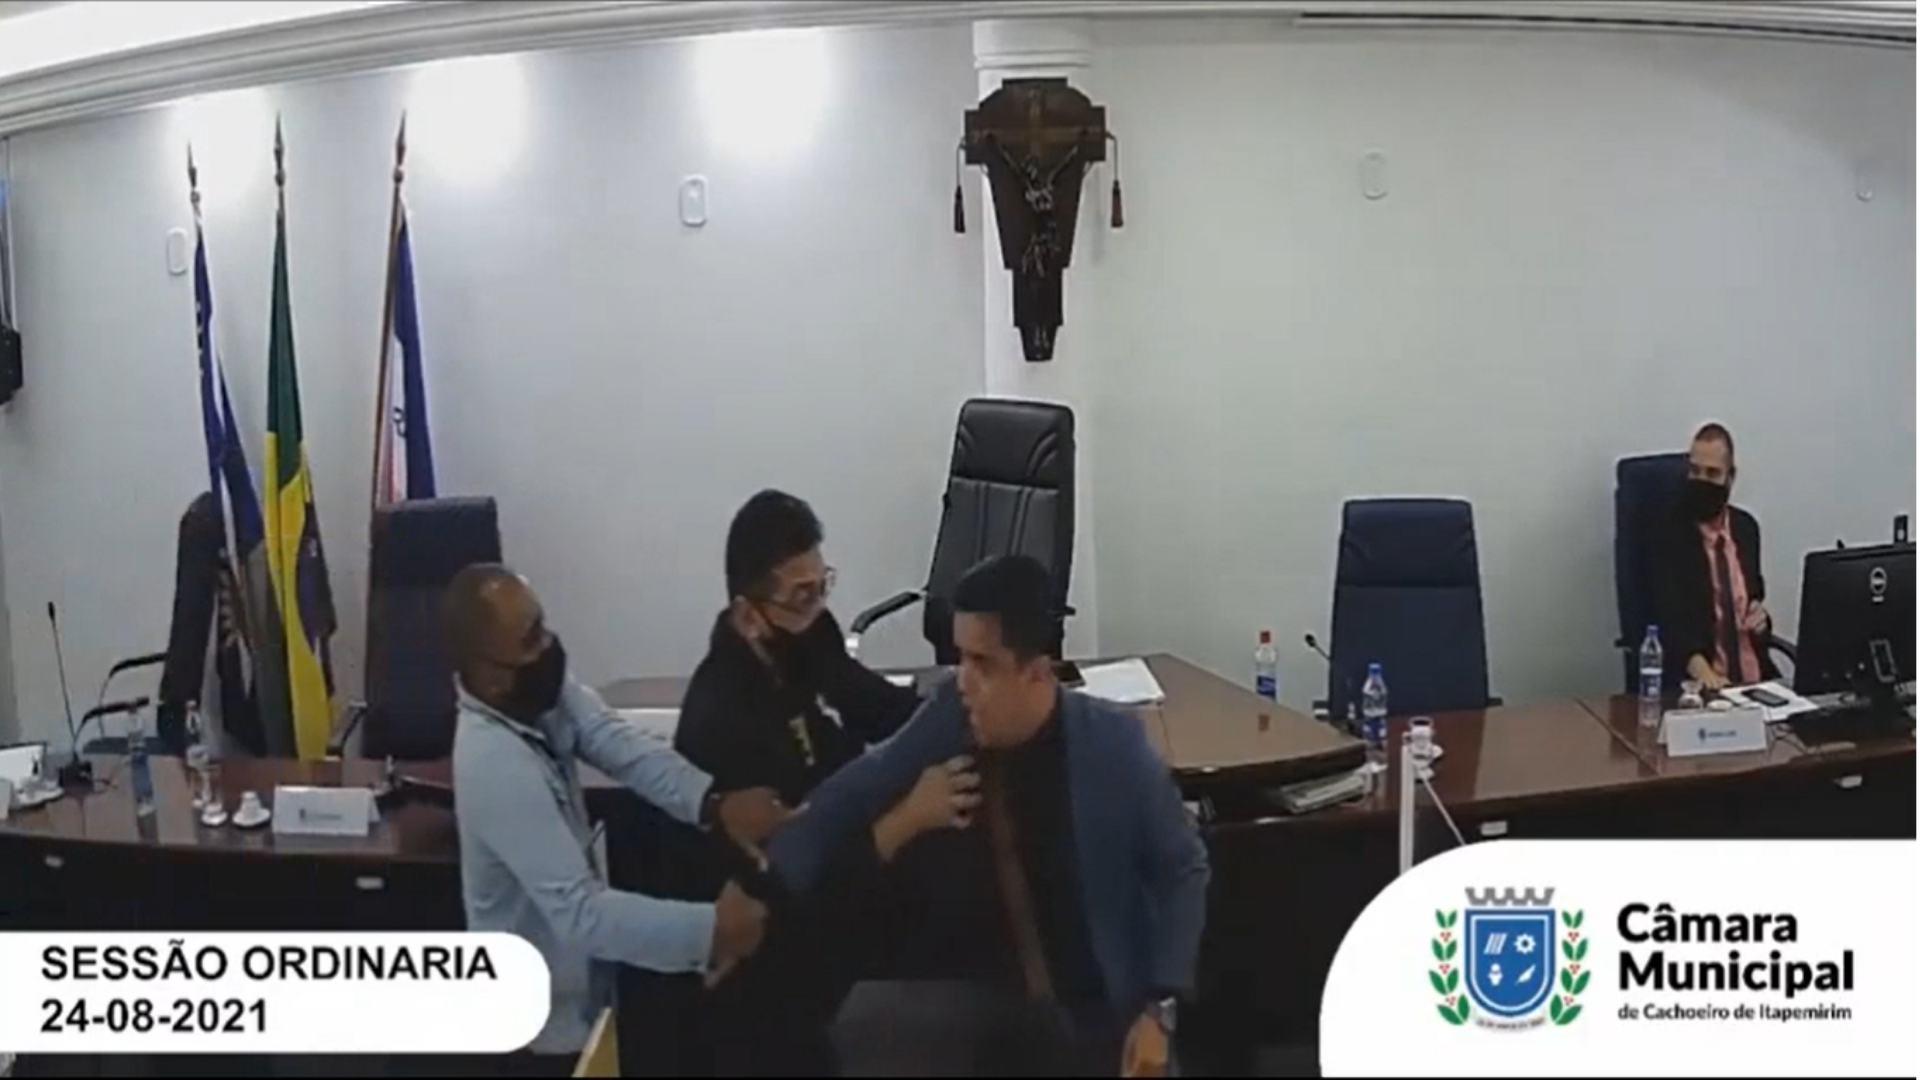 O caso envolve os vereadores Leo Camargo (PL) e Alexandre de Itaoca (PSB). Na mesma noite, após o ocorrido, Camargo registrou queixa contra Itaoca